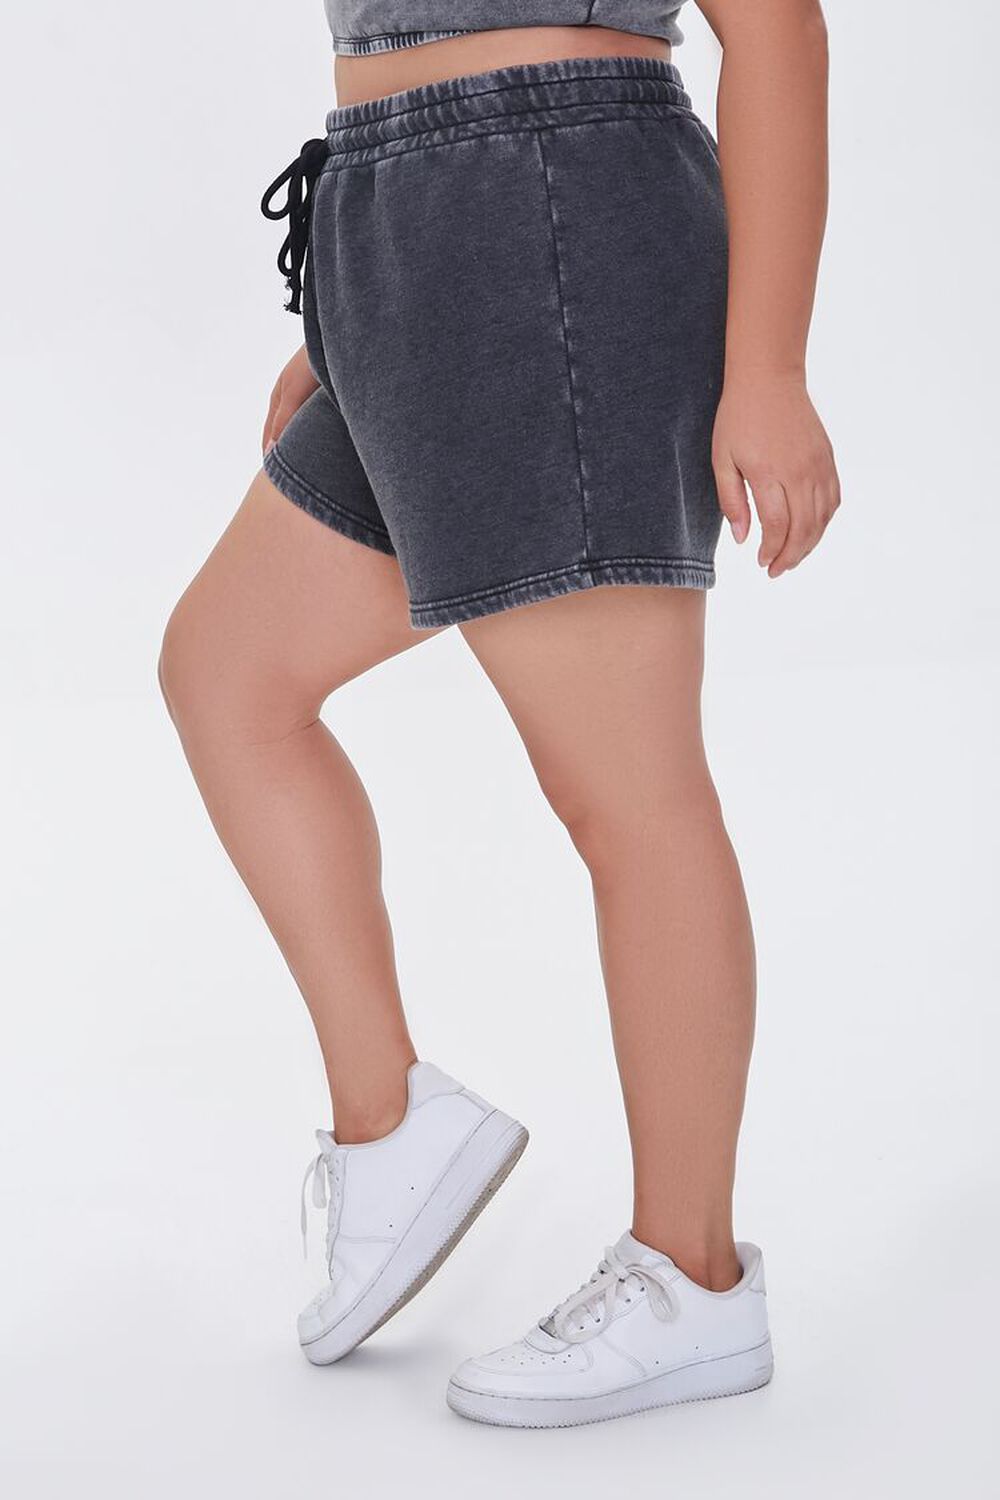 CHARCOAL Plus Size Fleece Drawstring Shorts, image 3